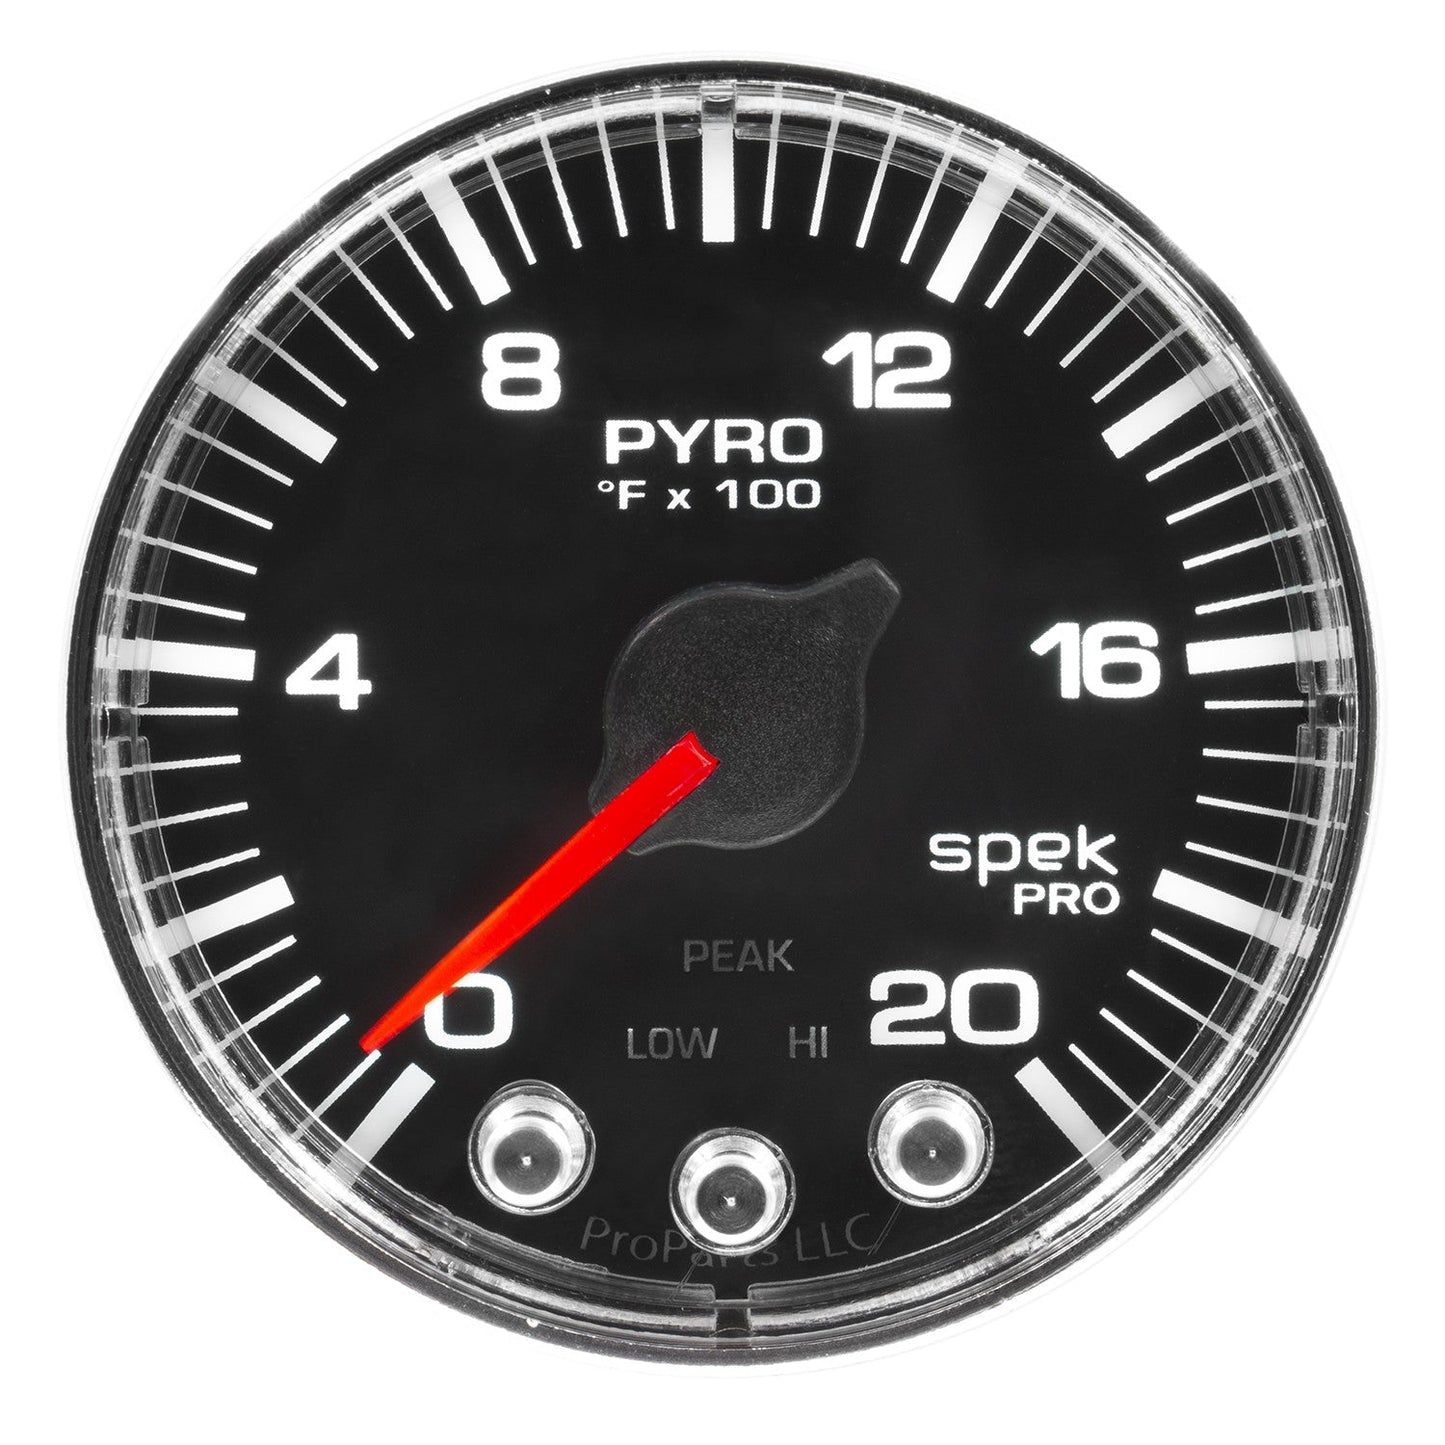 AutoMeter - PIRÔMETRO DE 2-1/16", 0-2000 °F, MOTOR DE PASSO, SPEK-PRO, DIAL PRETO, BEZEL CROMADO, LENTE ANTI-REFLEXO PLANA (P310318)